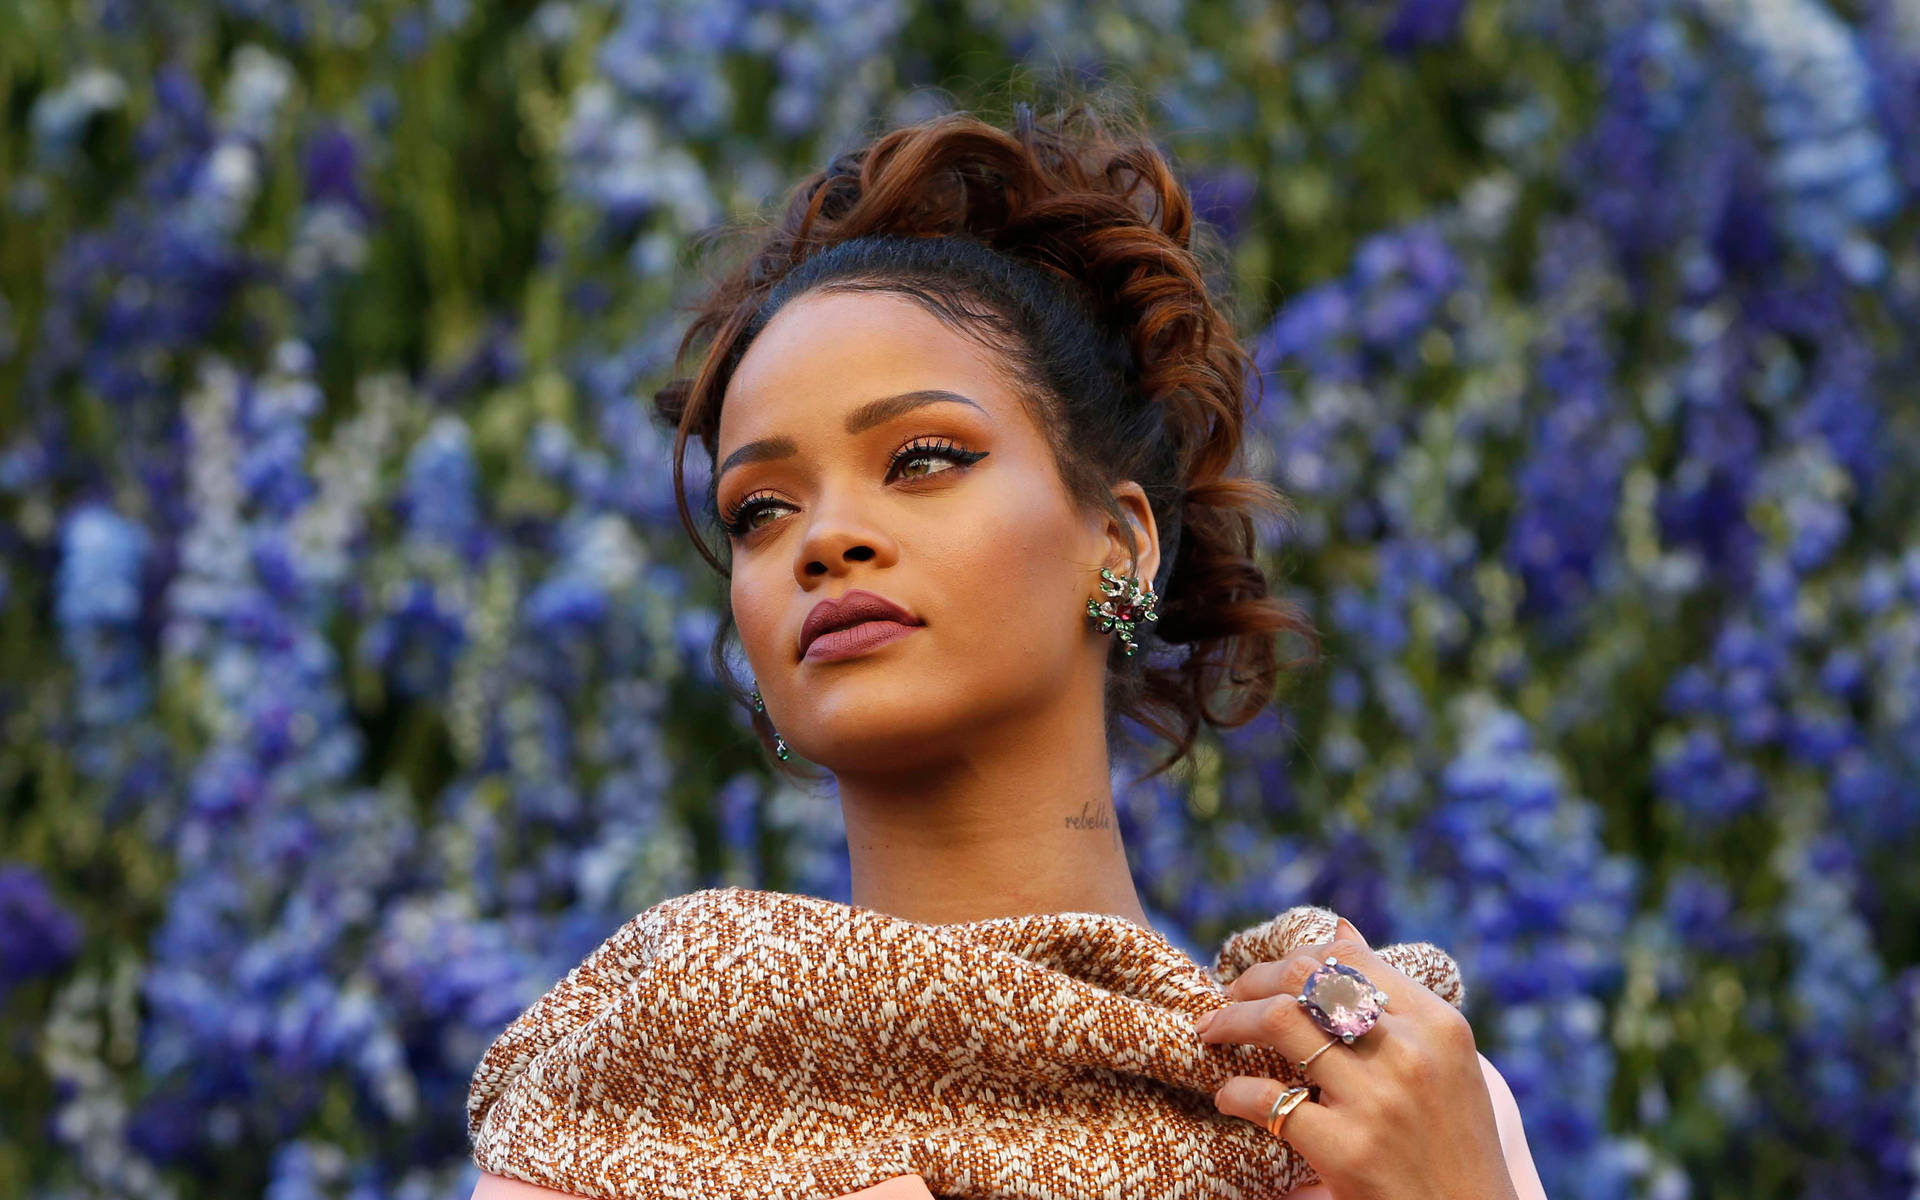 Free Rihanna Hd Wallpaper Downloads, [100+] Rihanna Hd Wallpapers for FREE  